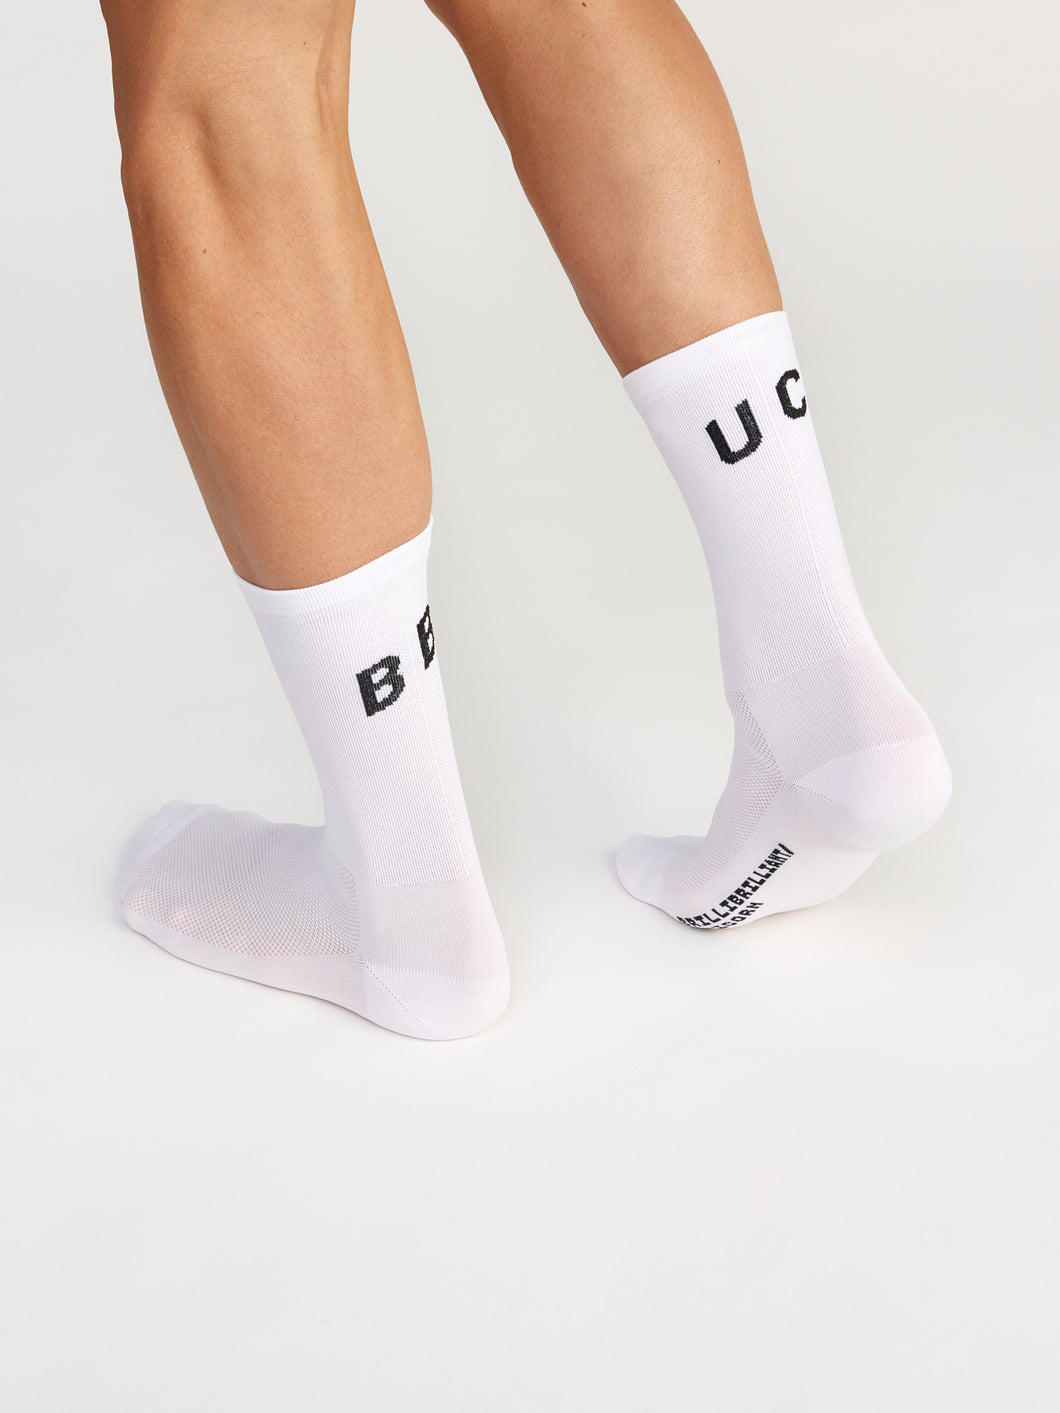 BBUC Socks